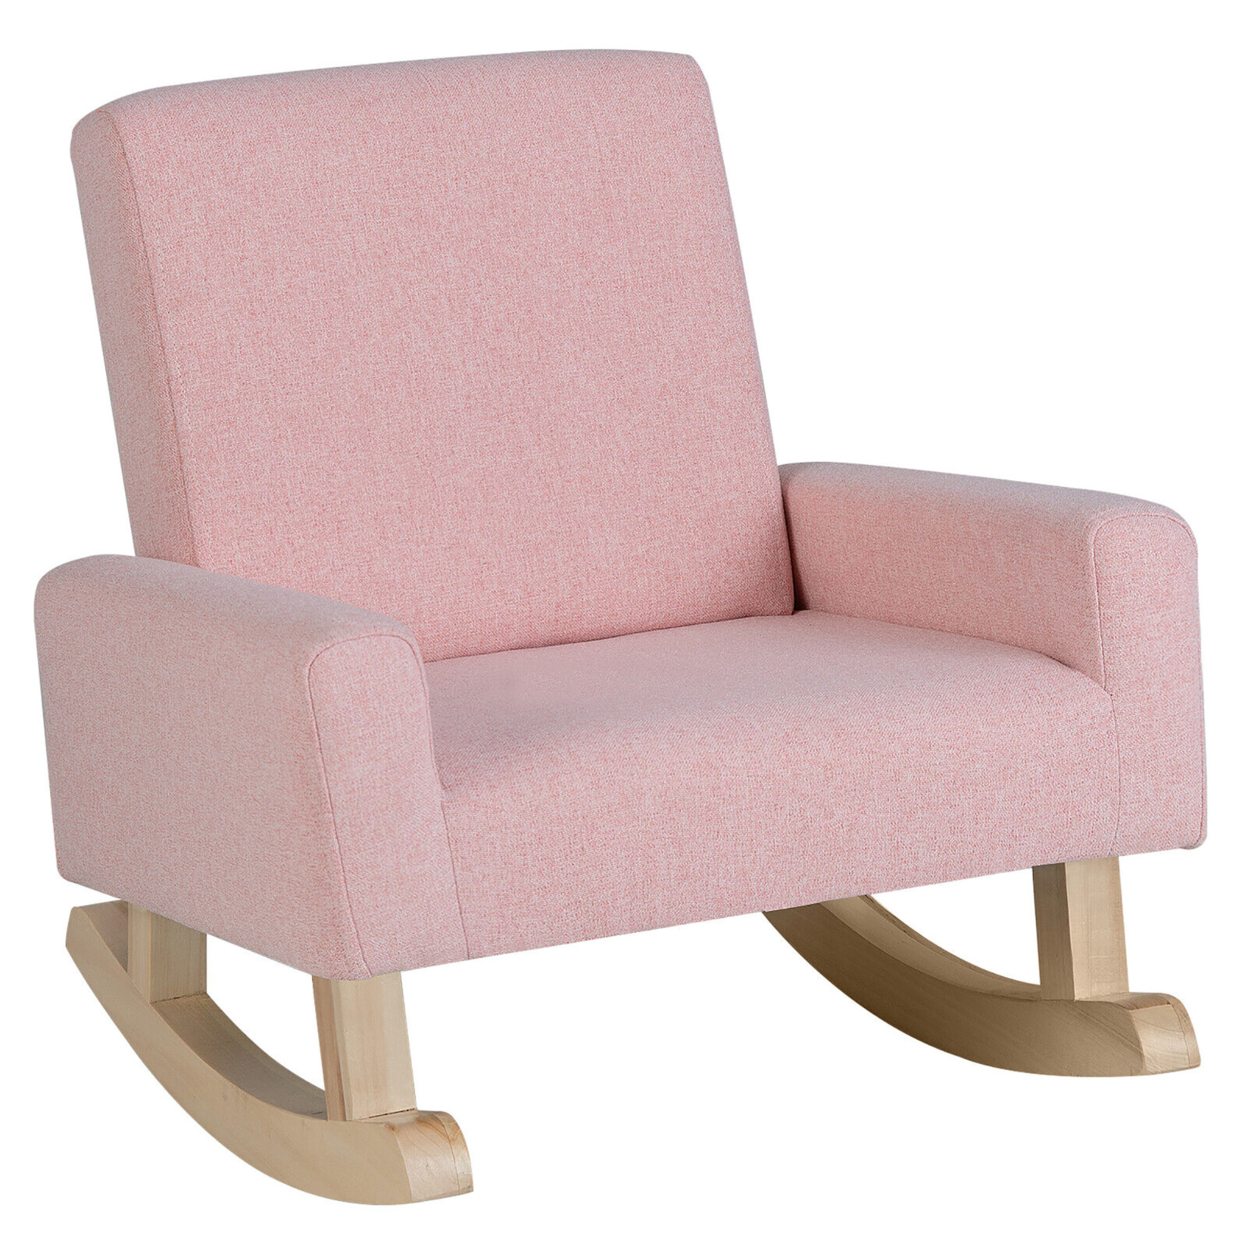 Kids Rocking Chair Children Armchair Linen Upholstered Sofa W/ Solid Wood Legs - Pink